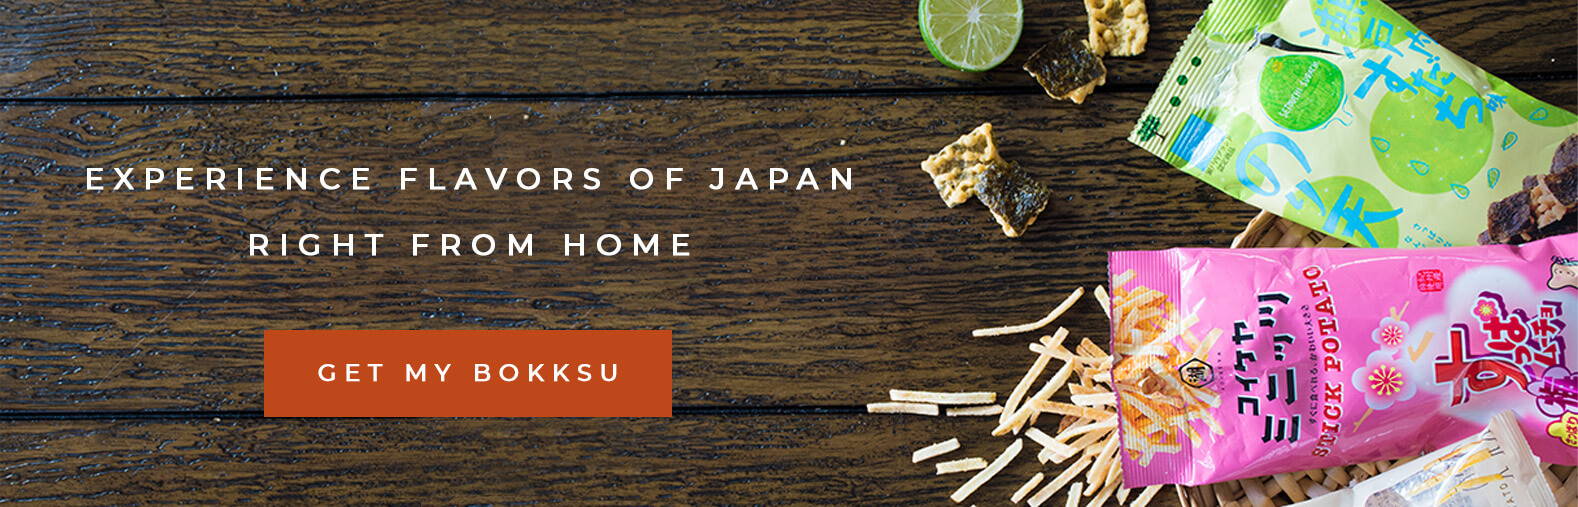 join bokksu japanese snack subscription box service